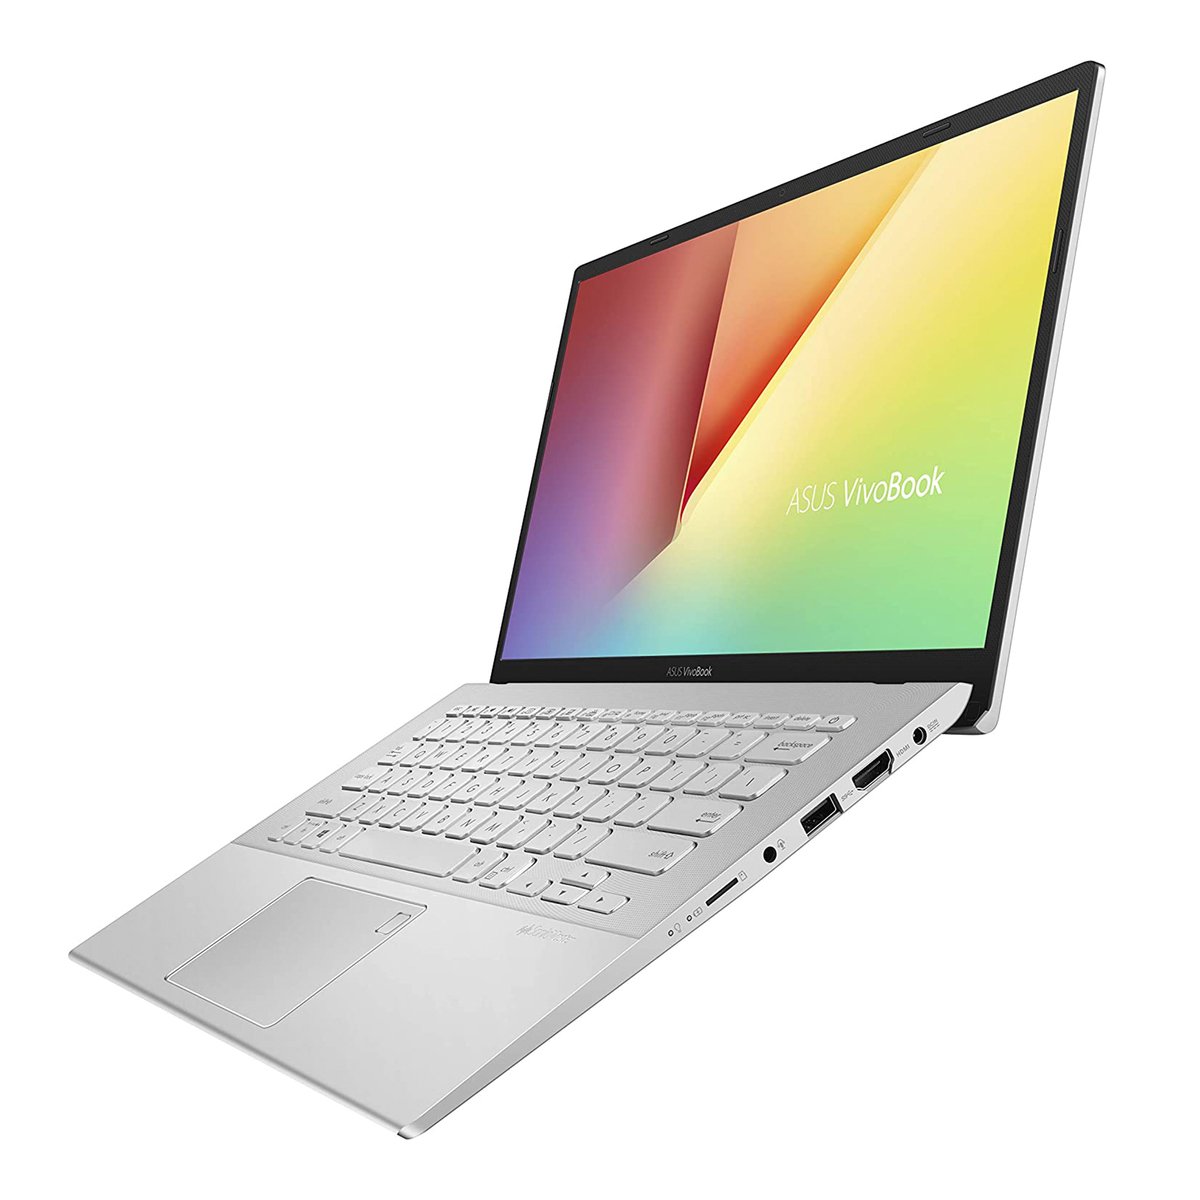 Asus VivoBook 14 A420FA-EB200T Laptop,Intel Core i5-8265U 3.9 GHz, 8 GB RAM, 512 GB SSD, Integrated UHD Graphics 620,14 inches, Windows 10,Transparent Silver